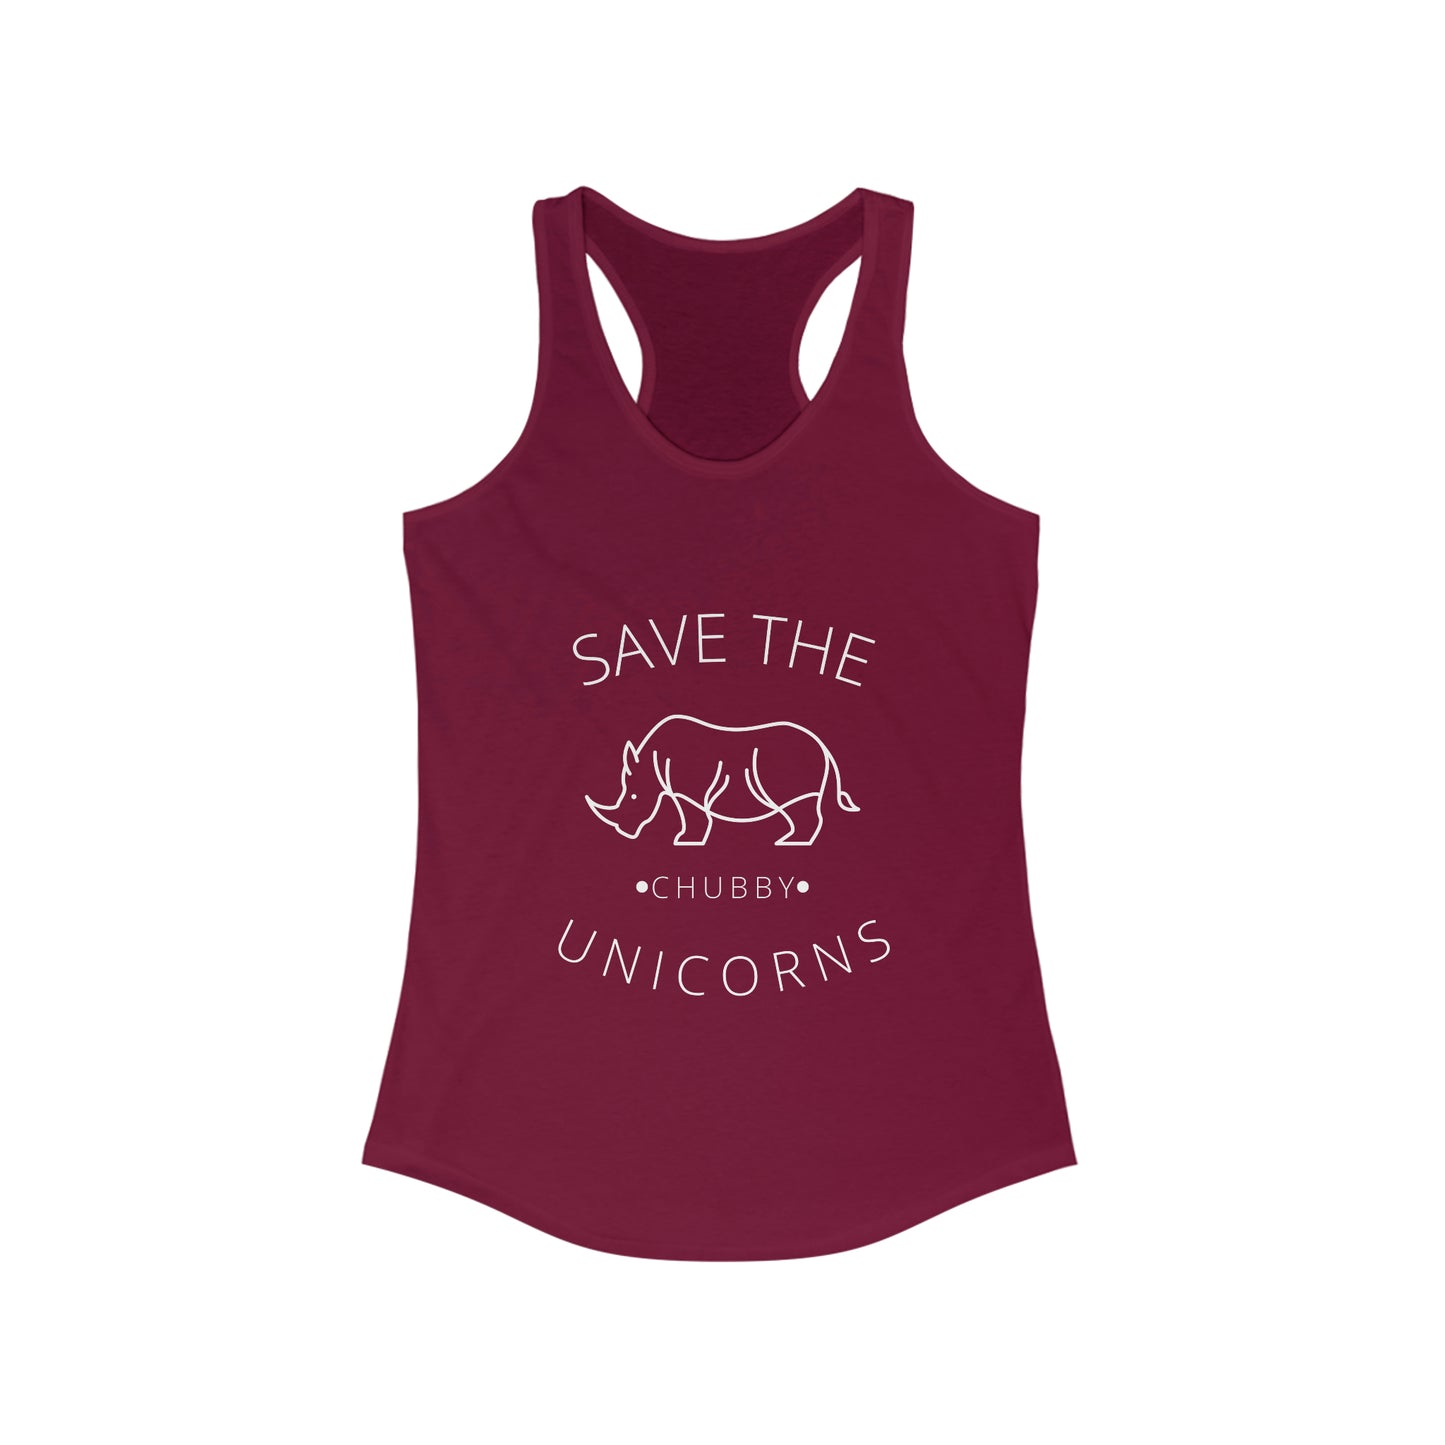 Save The Chubby Unicorns - Women's Ideal Racerback Tank